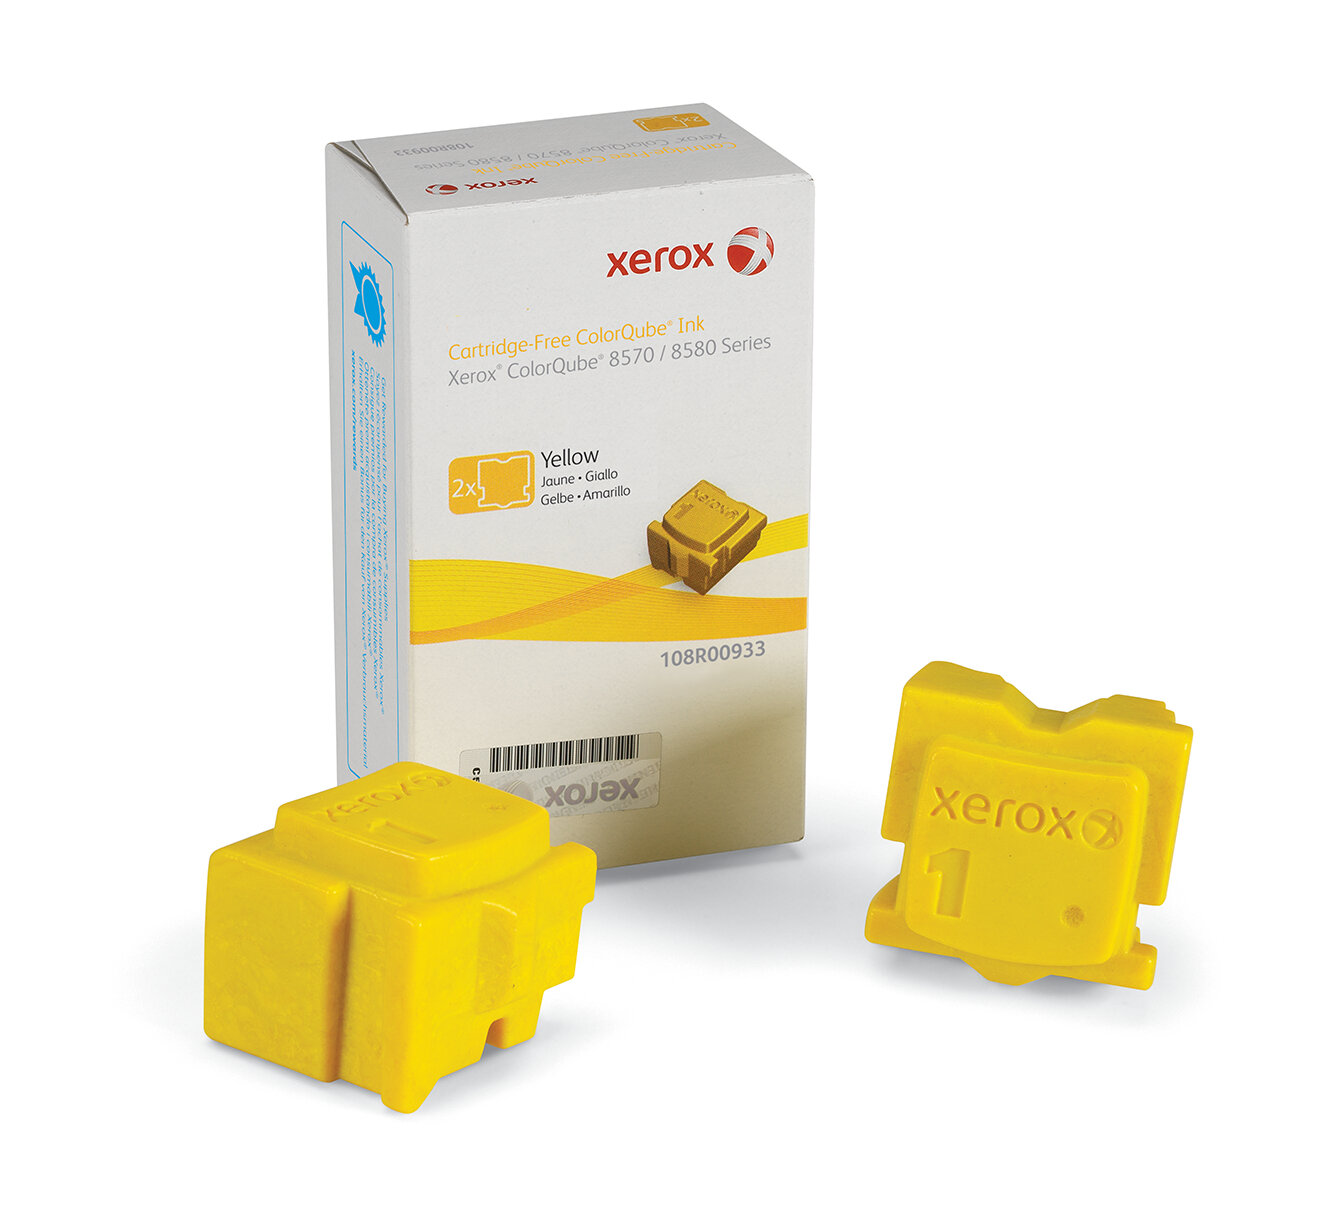 Xerox ColorCube 8570 yellow stix (2) wax 